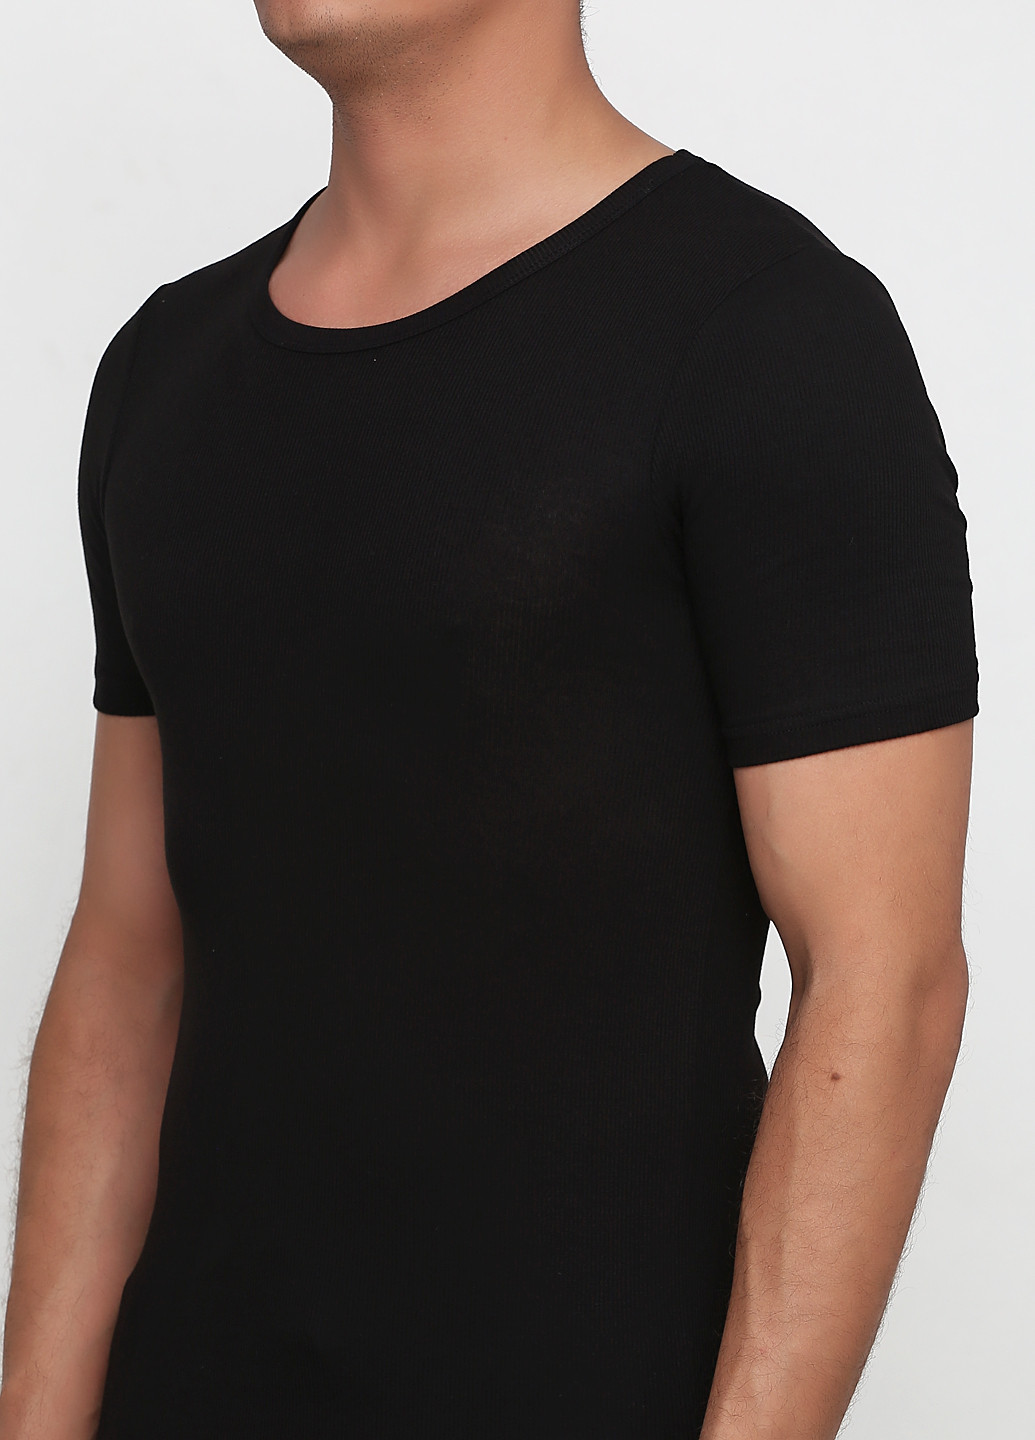 Черная футболка Livergy